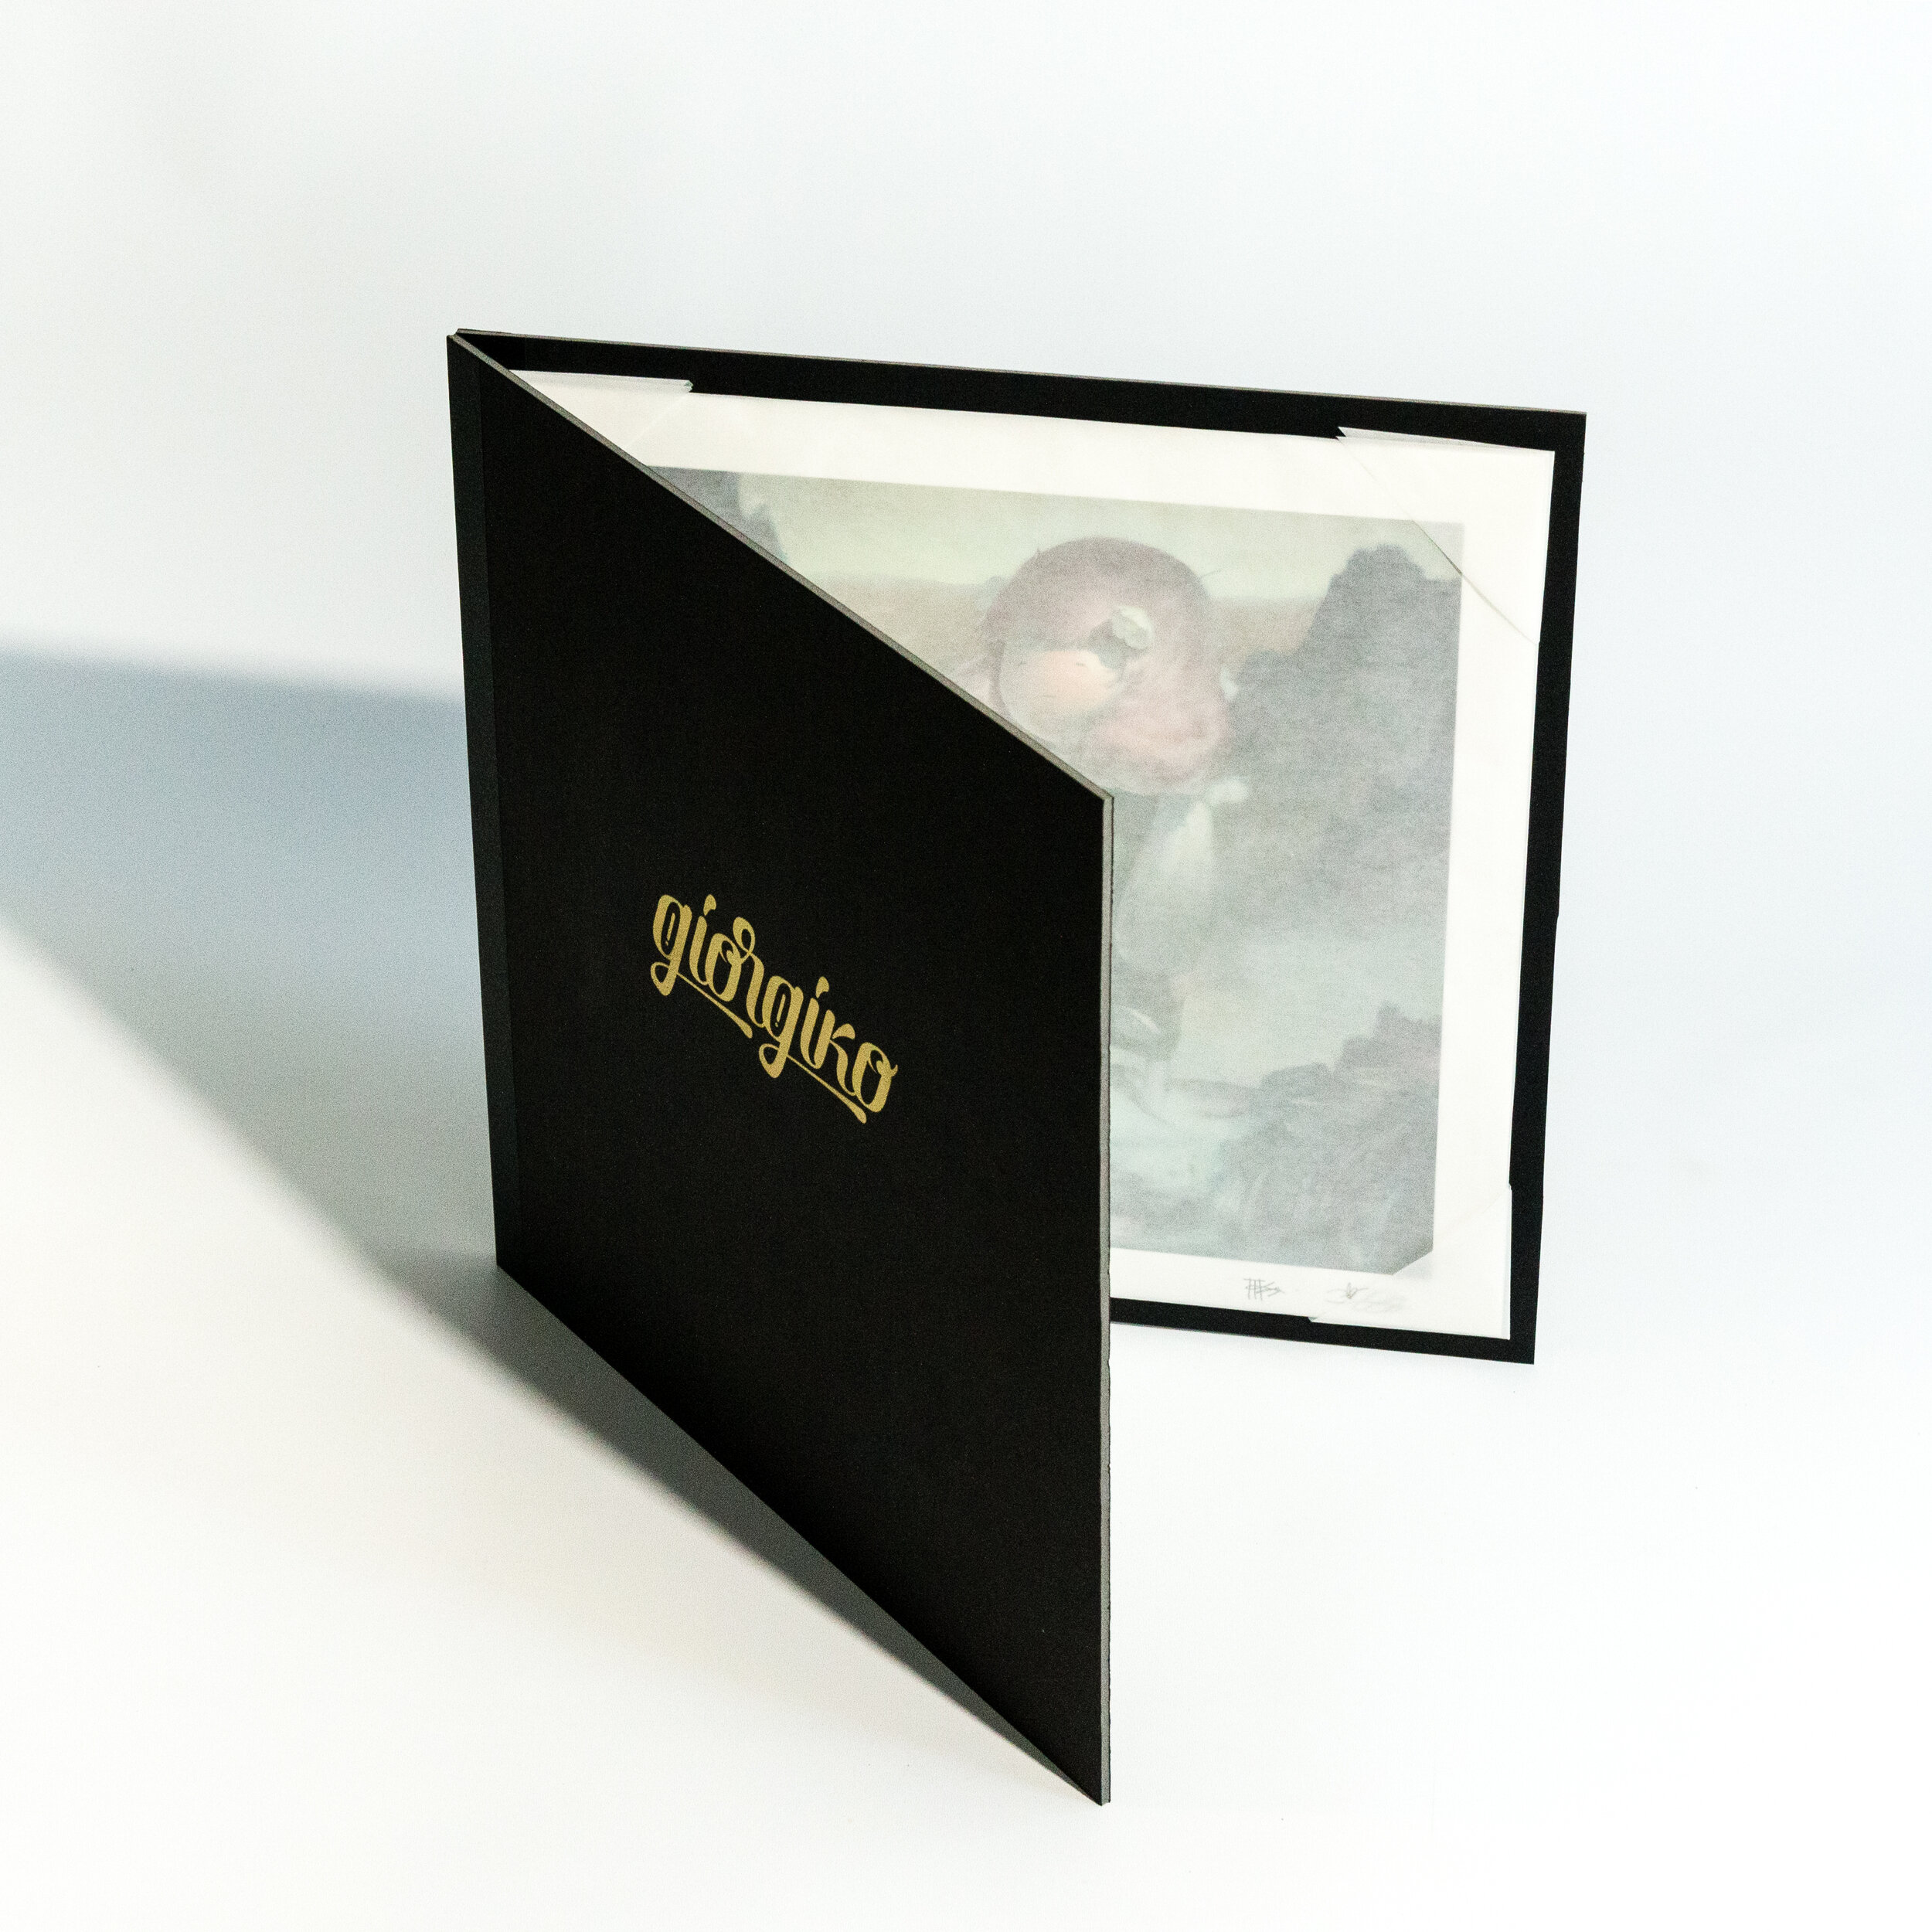 Giorgiko - Wonder Wander limited edition - 2018 portfolio.jpg